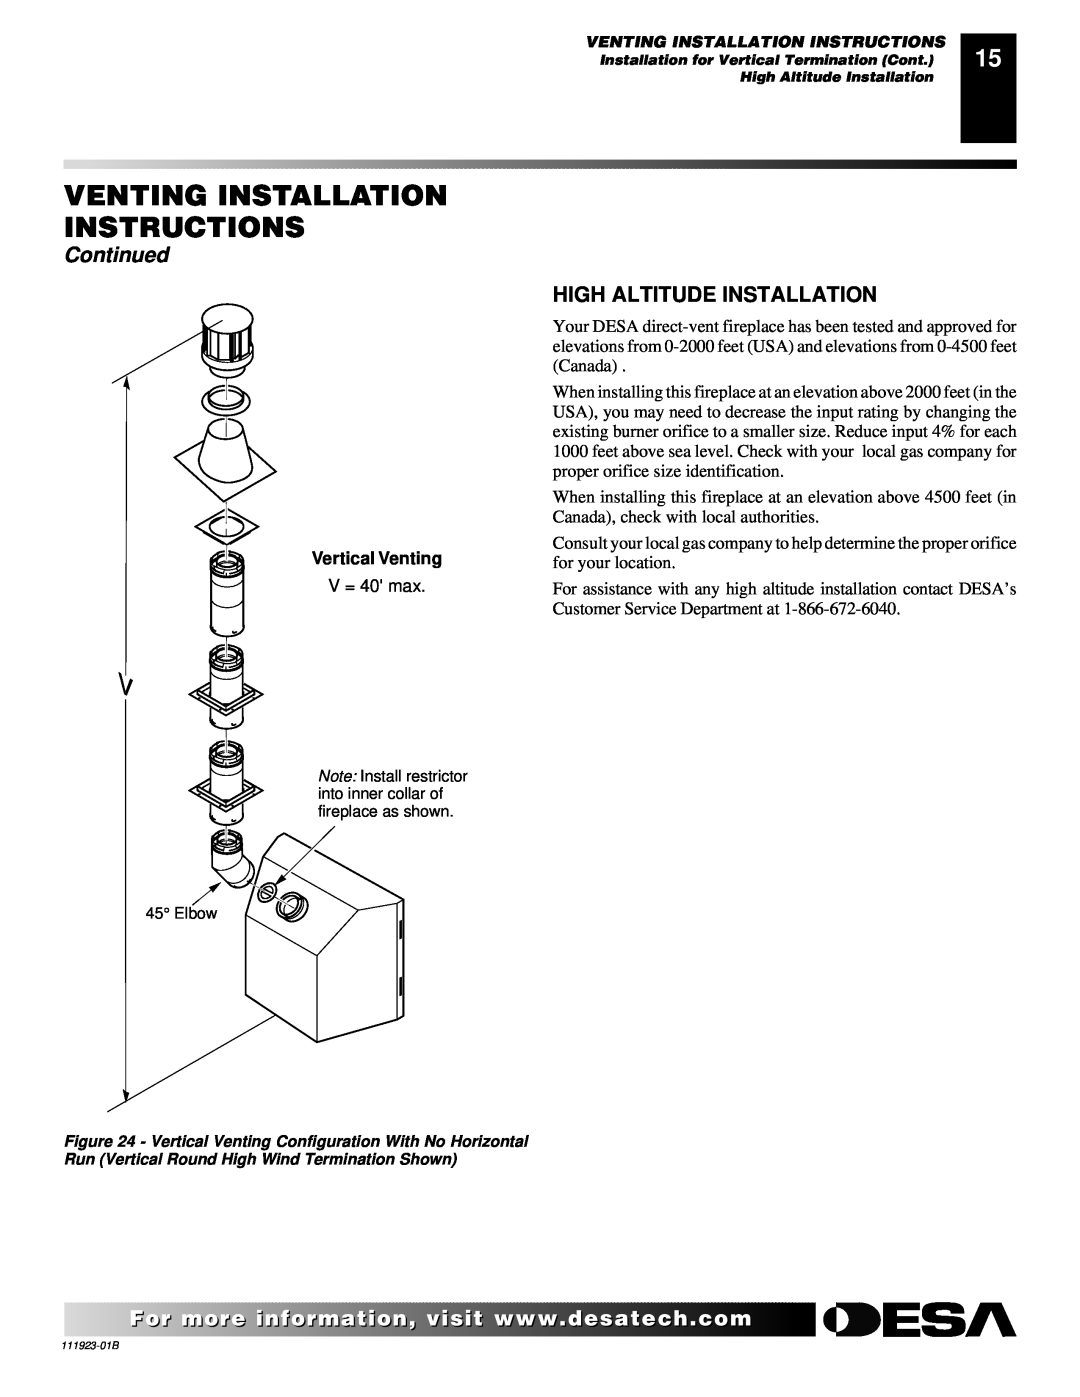 Desa (V)K36P SERIES High Altitude Installation, Venting Installation Instructions, Continued, Vertical Venting 